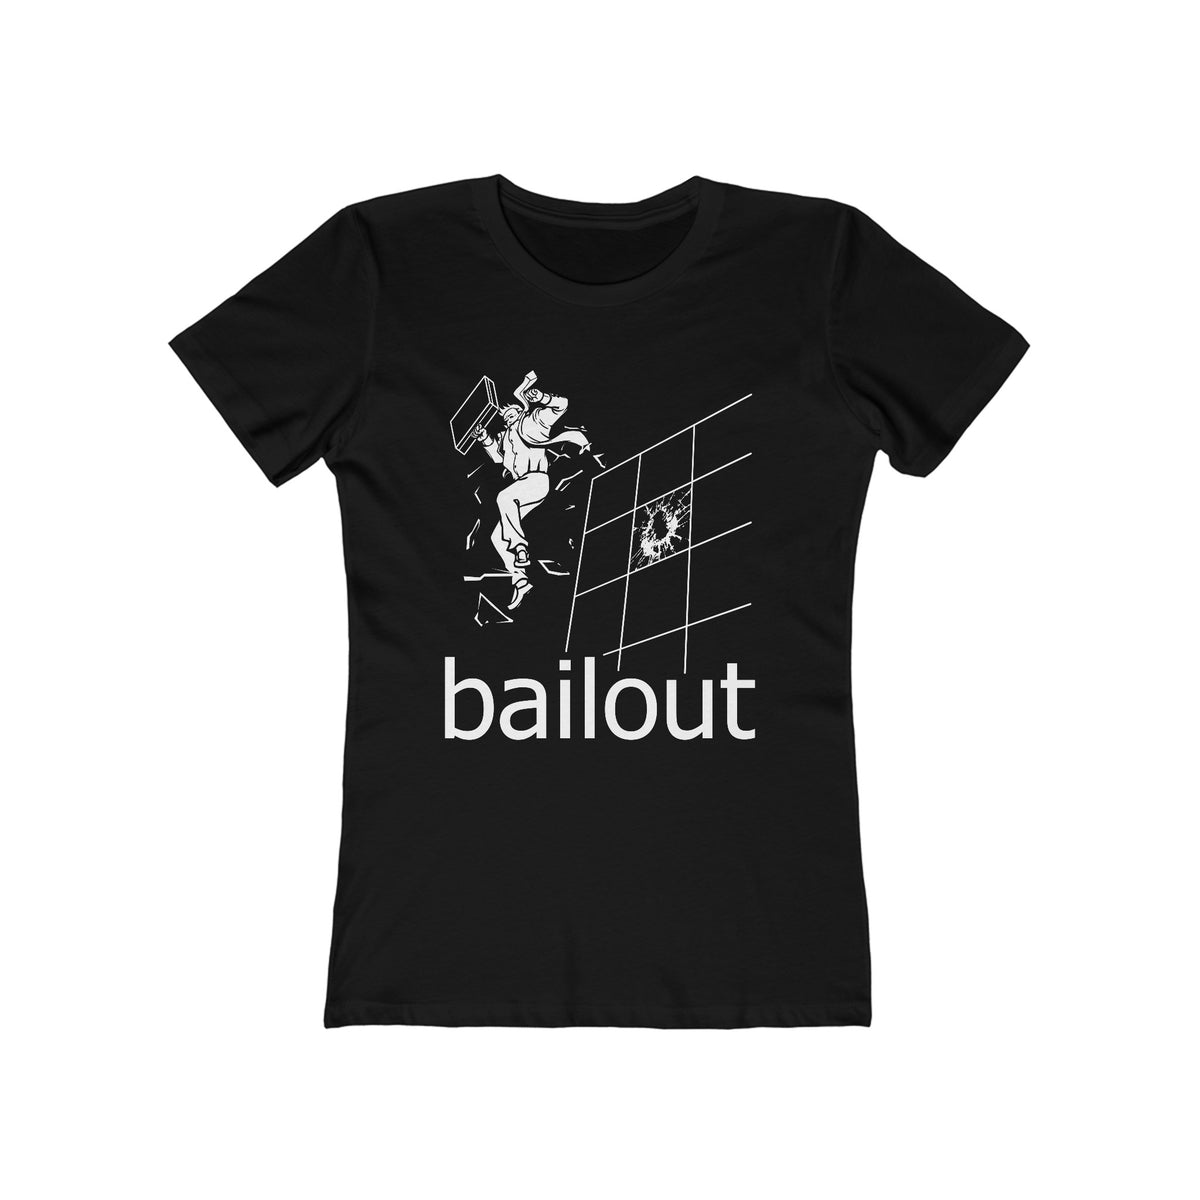 Bailout - Women’s T-Shirt